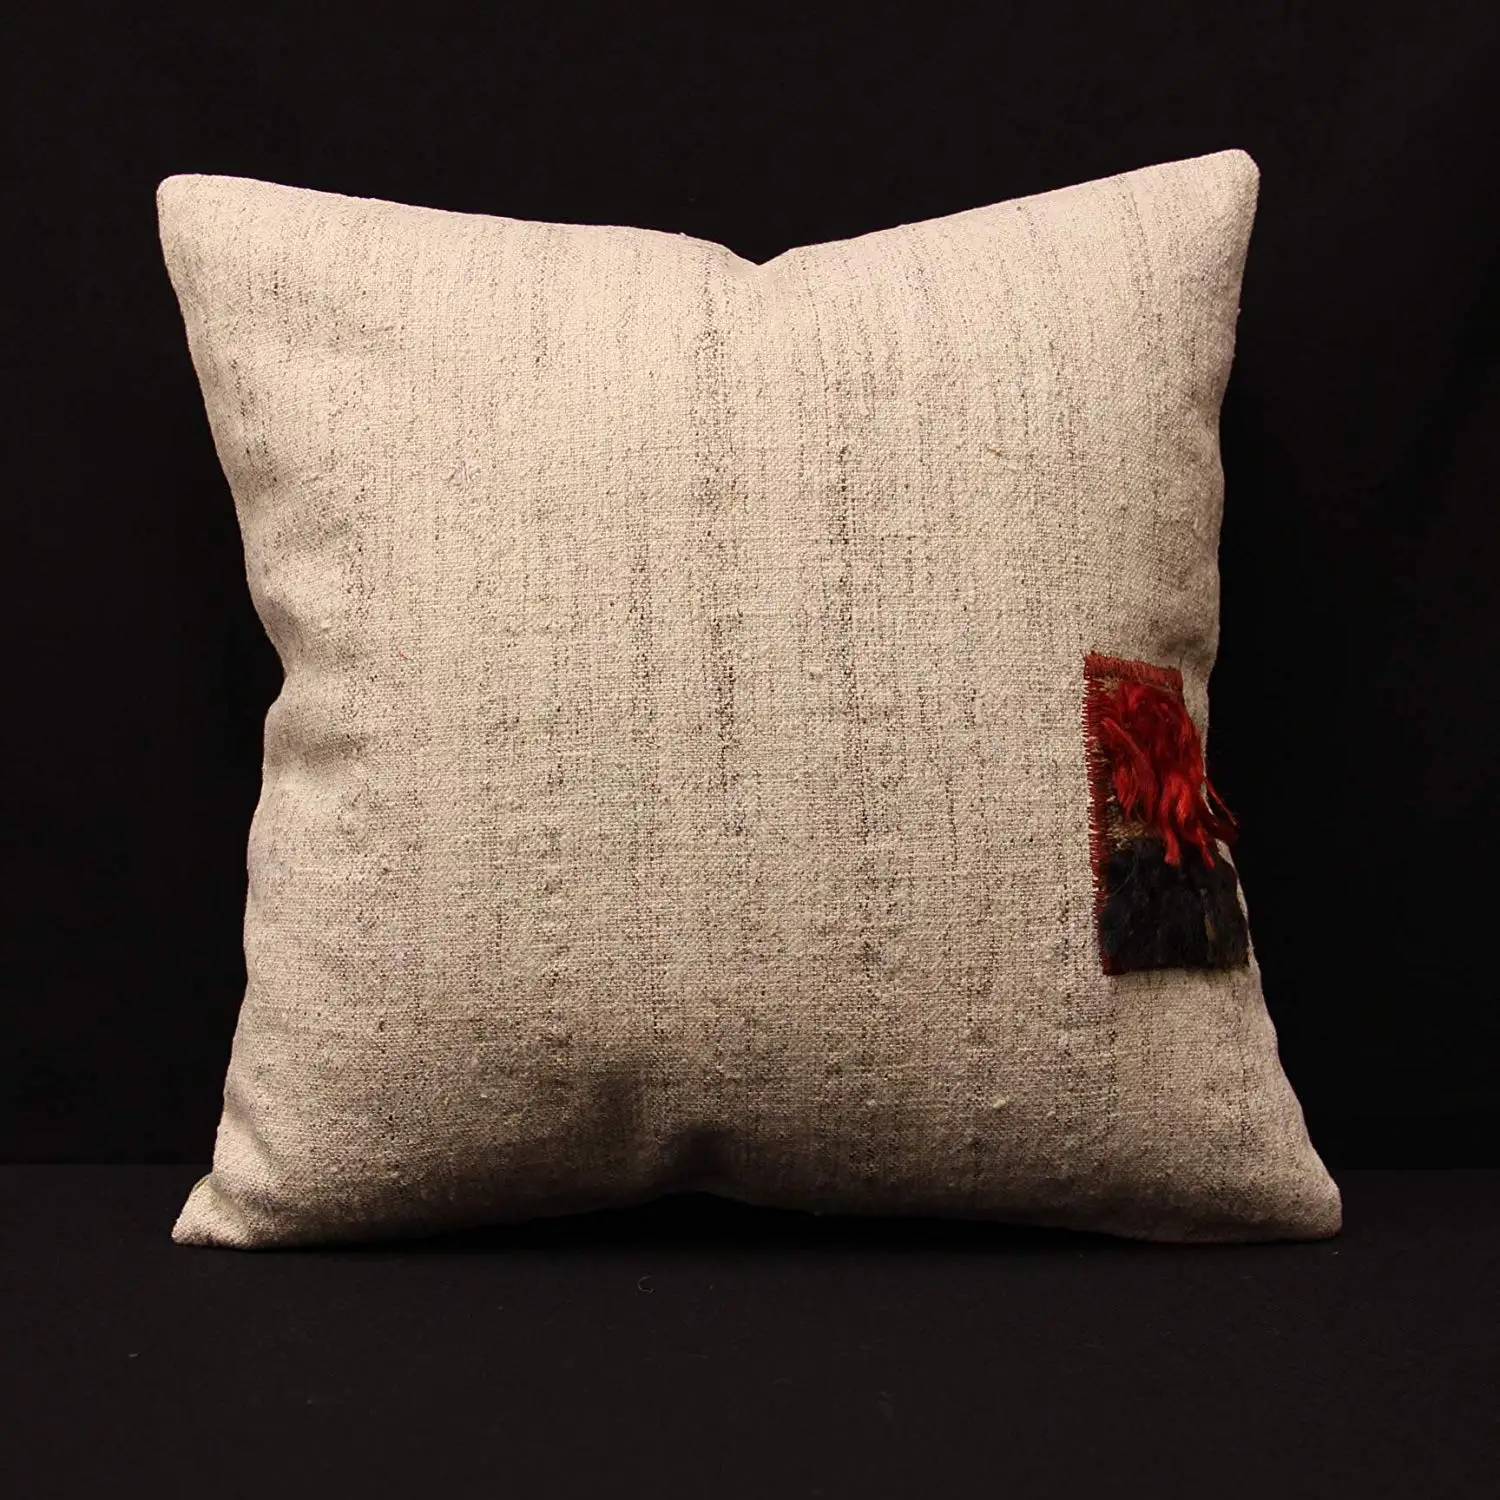 newport decorative pillows